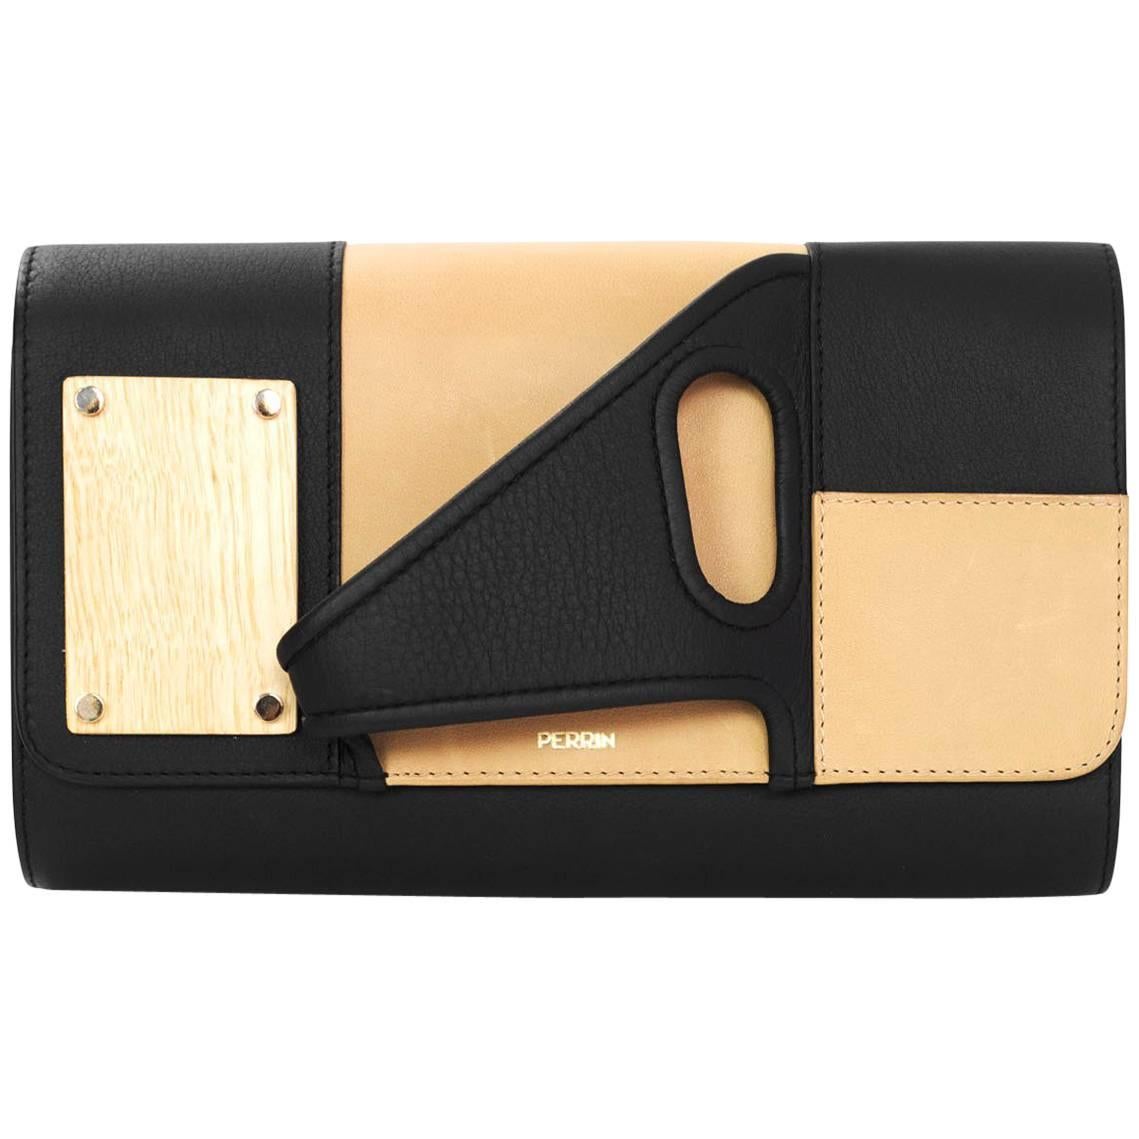 Perrin Black, Sand & Wood Colorblock L'asymetrique Glove Clutch Bag